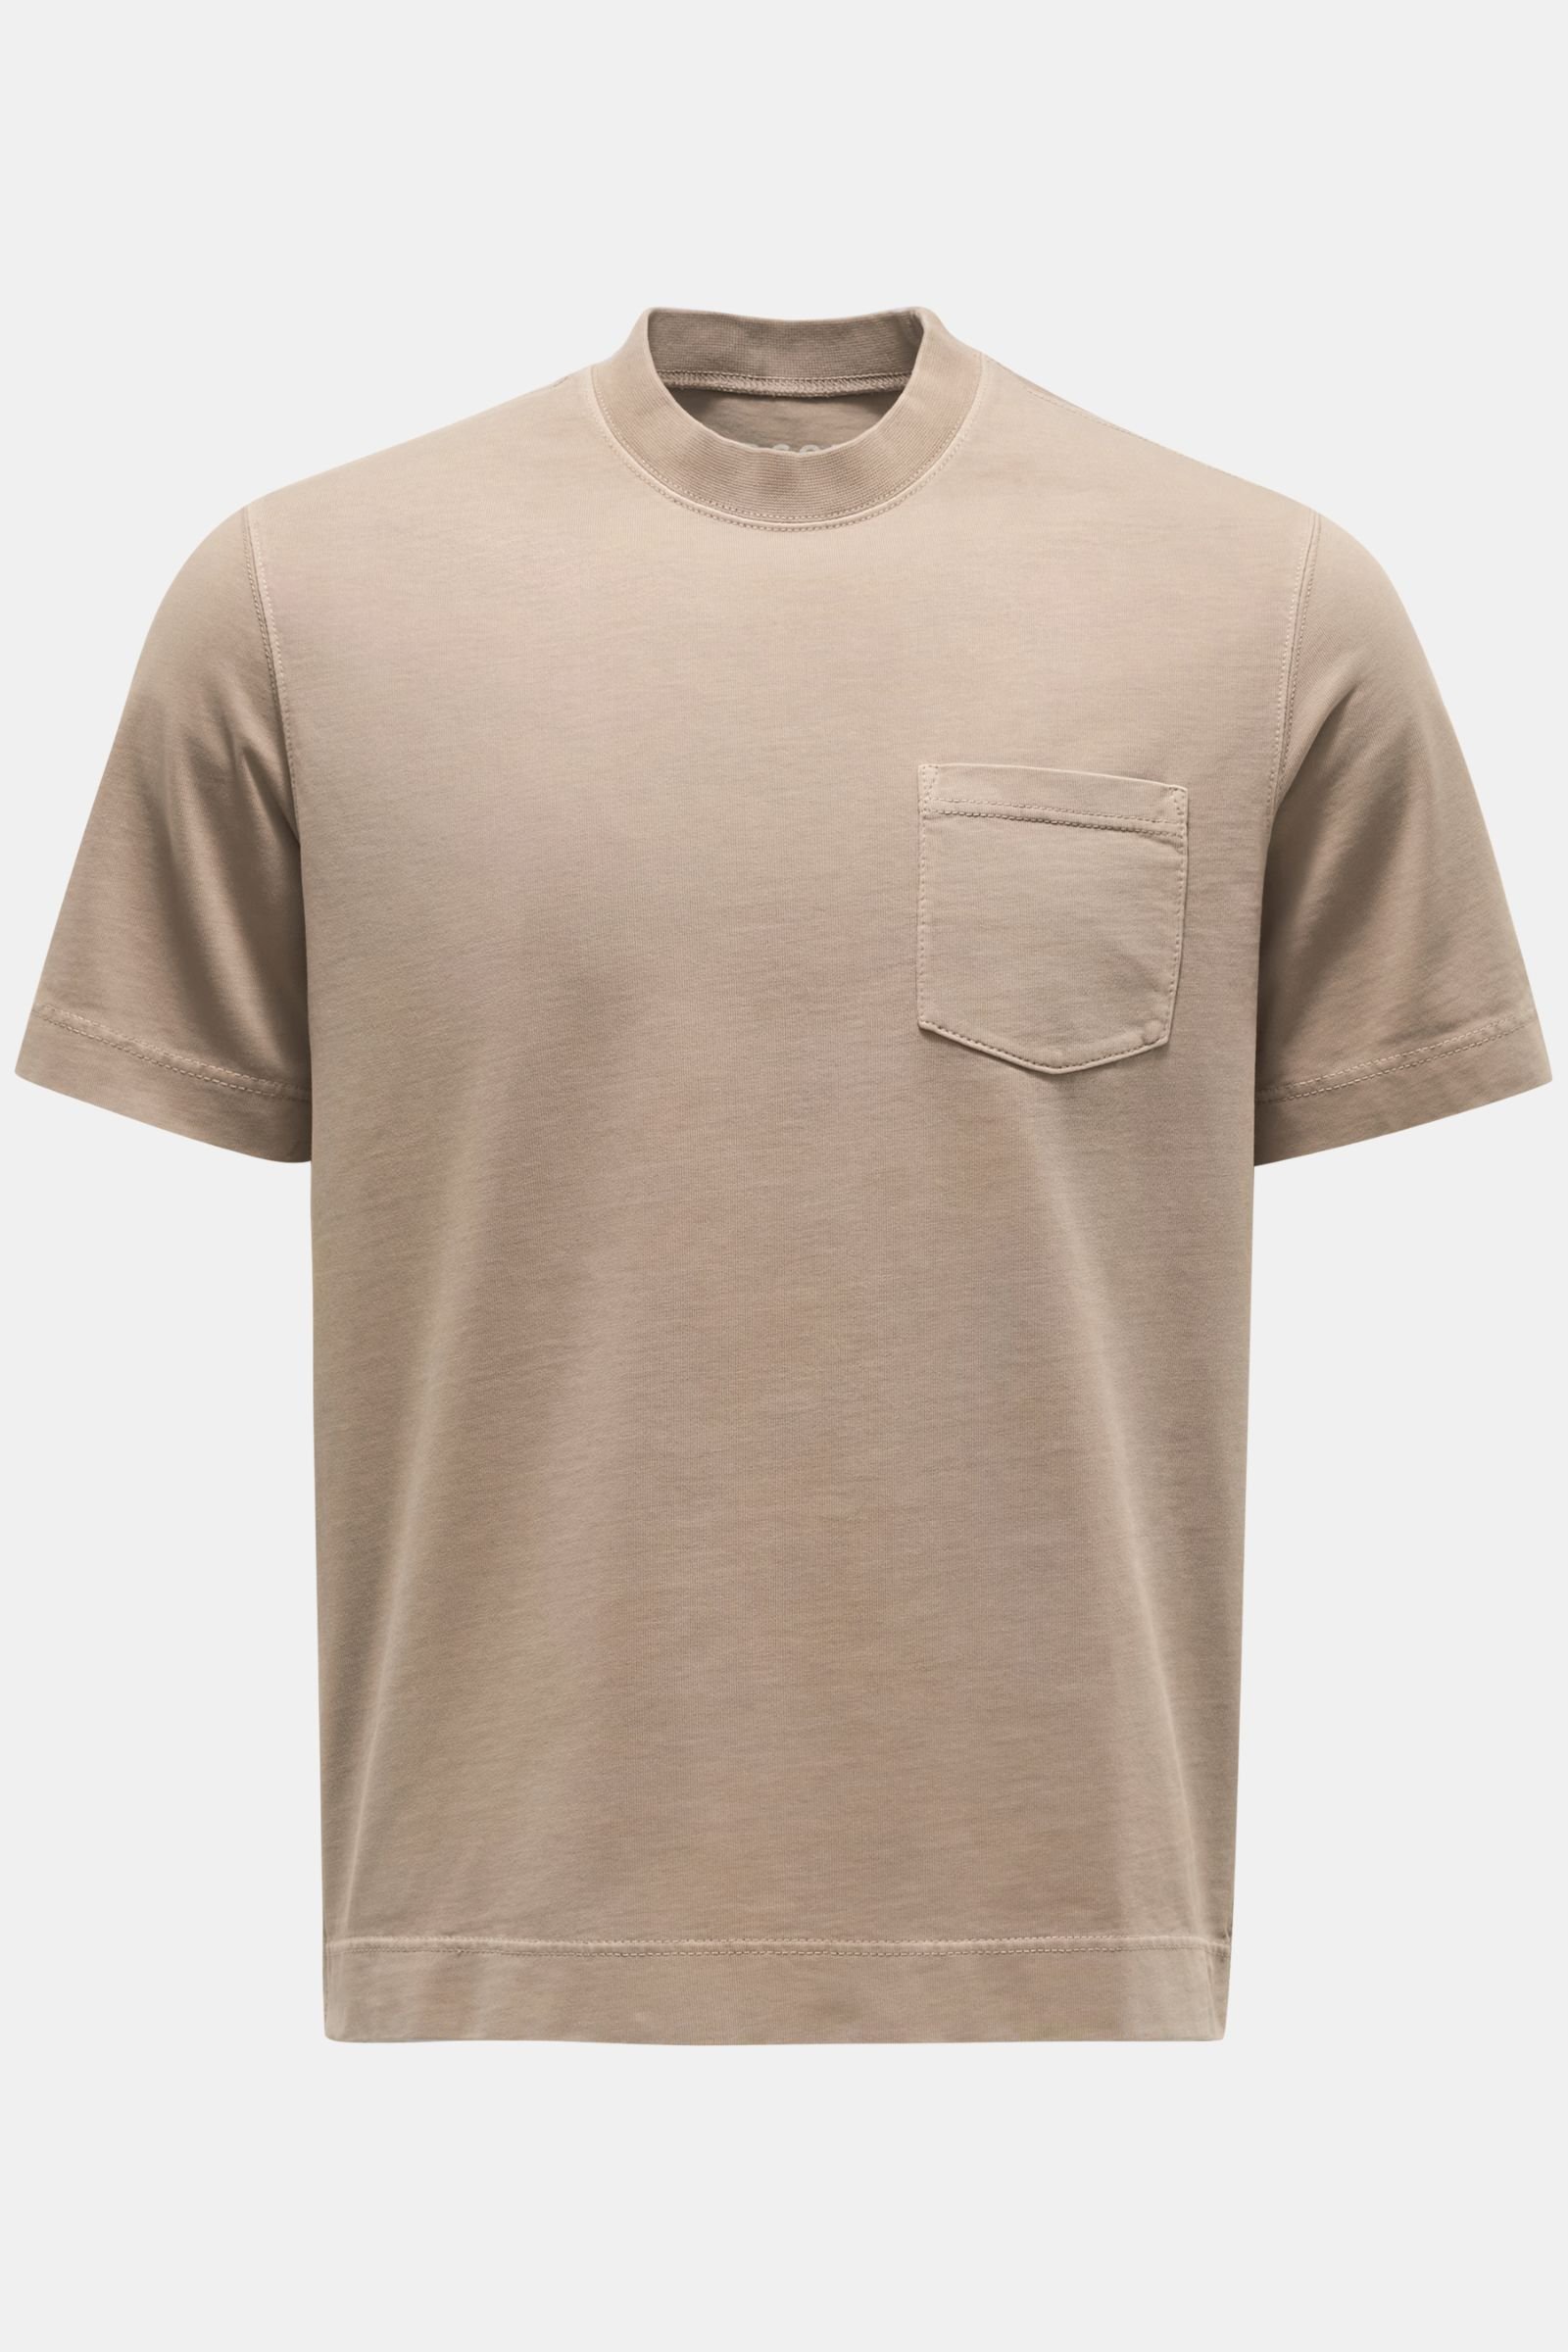 Crew neck T-shirt grey-brown